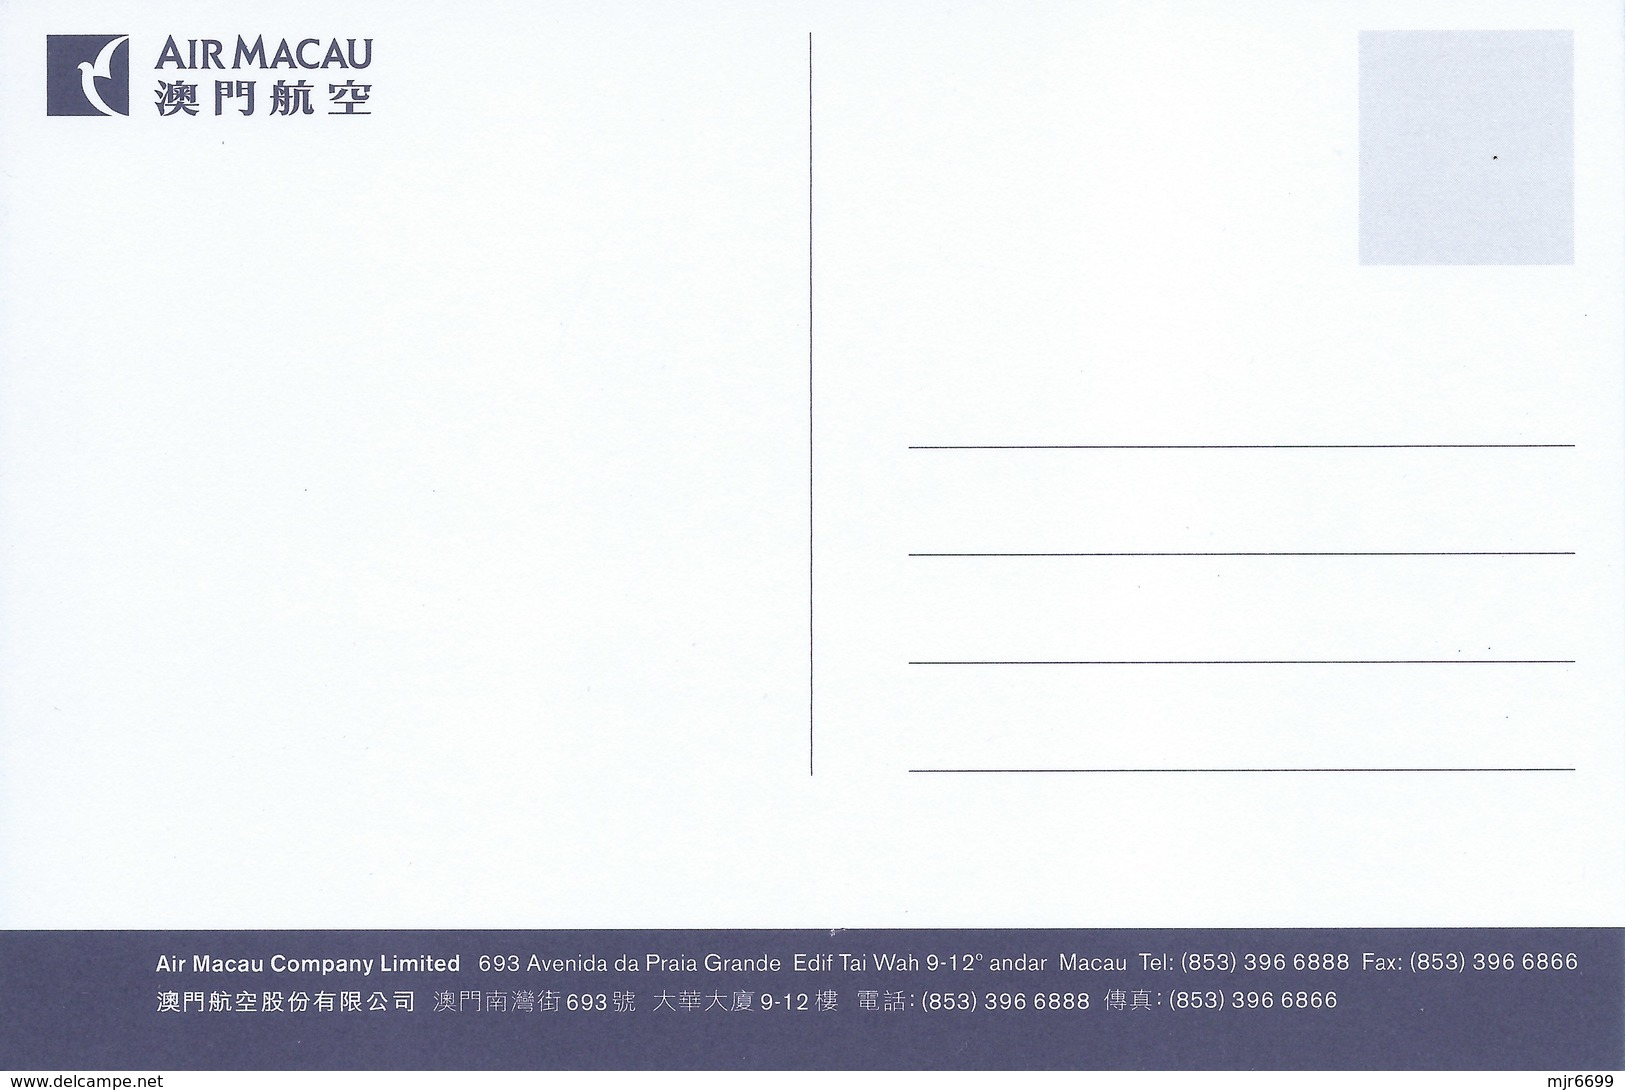 MACAU AIR MACAU COMPANY LIMITED AIRLINE POST CARD - Chine